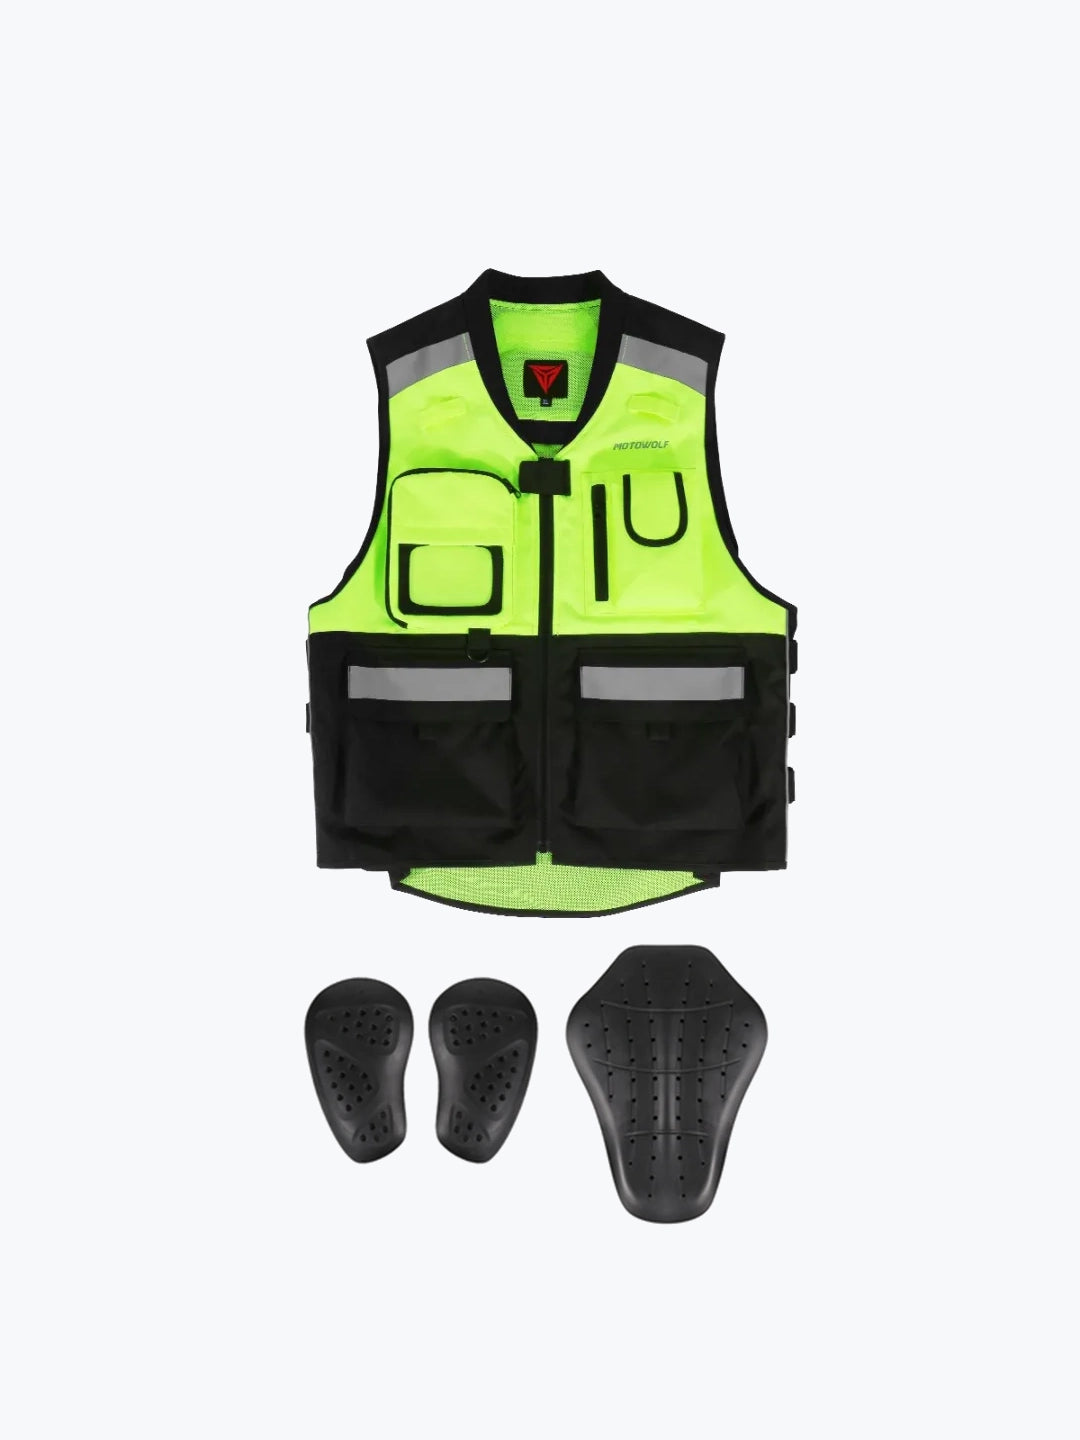 Motowolf Vest With Pad Black Green 0504